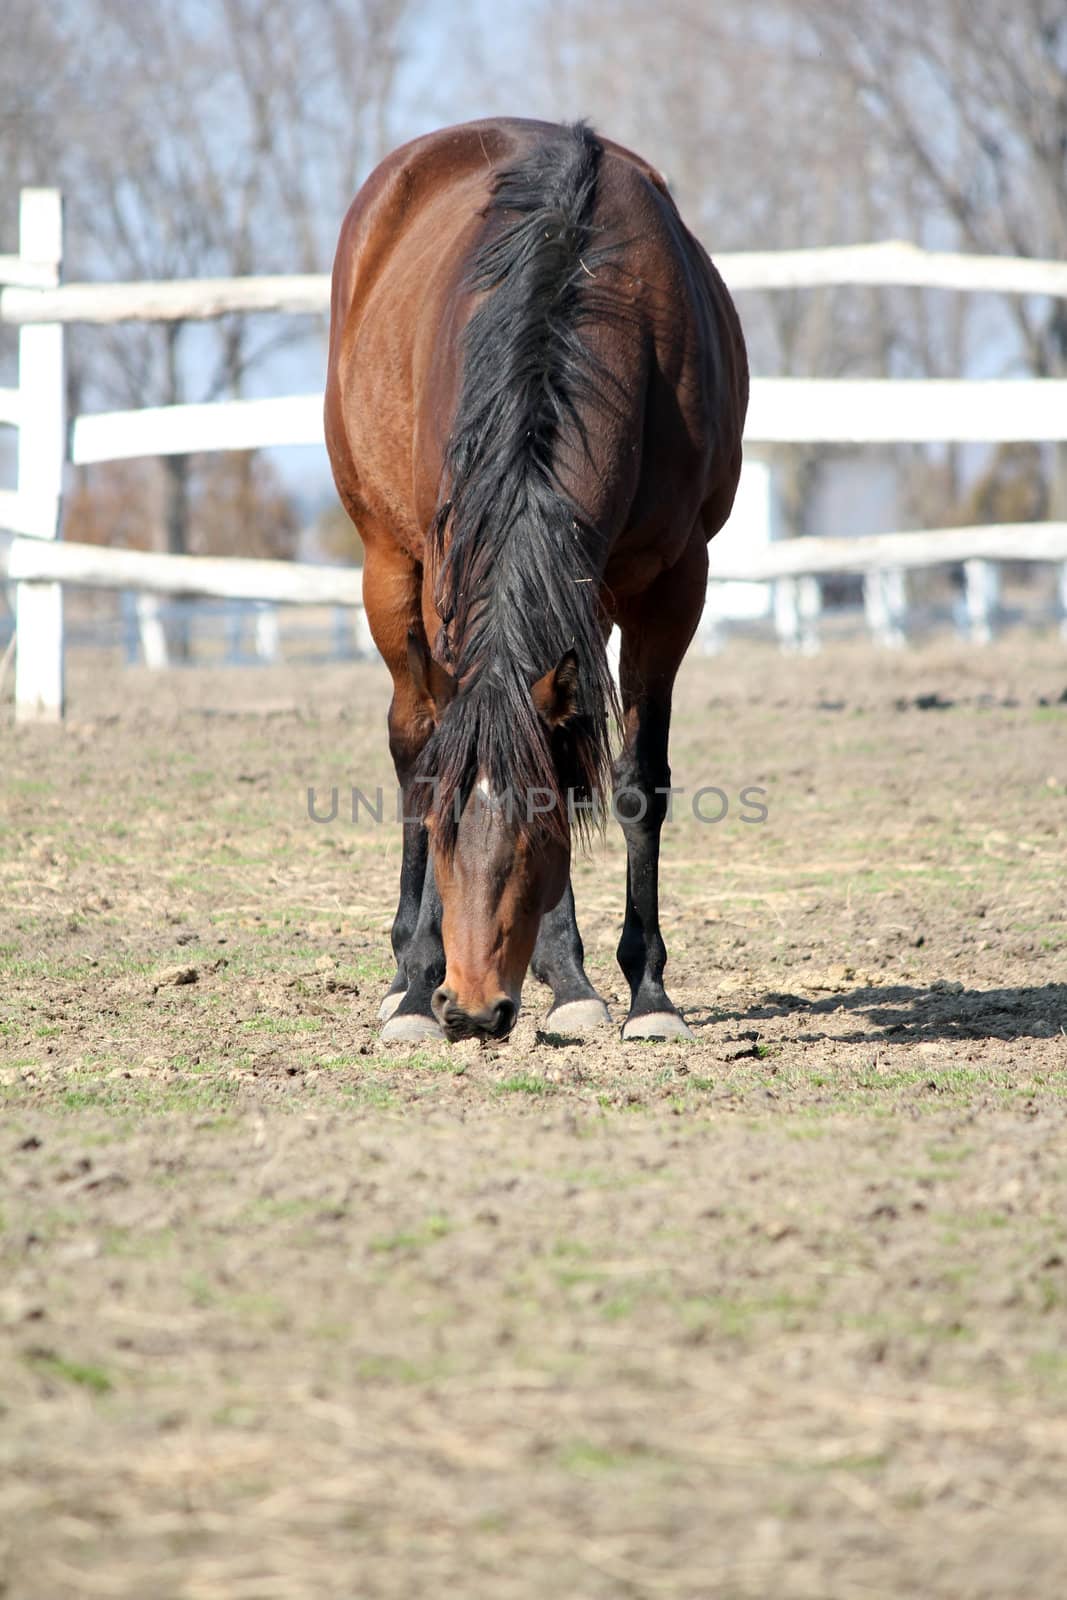 horse in corral ranch scene by goce